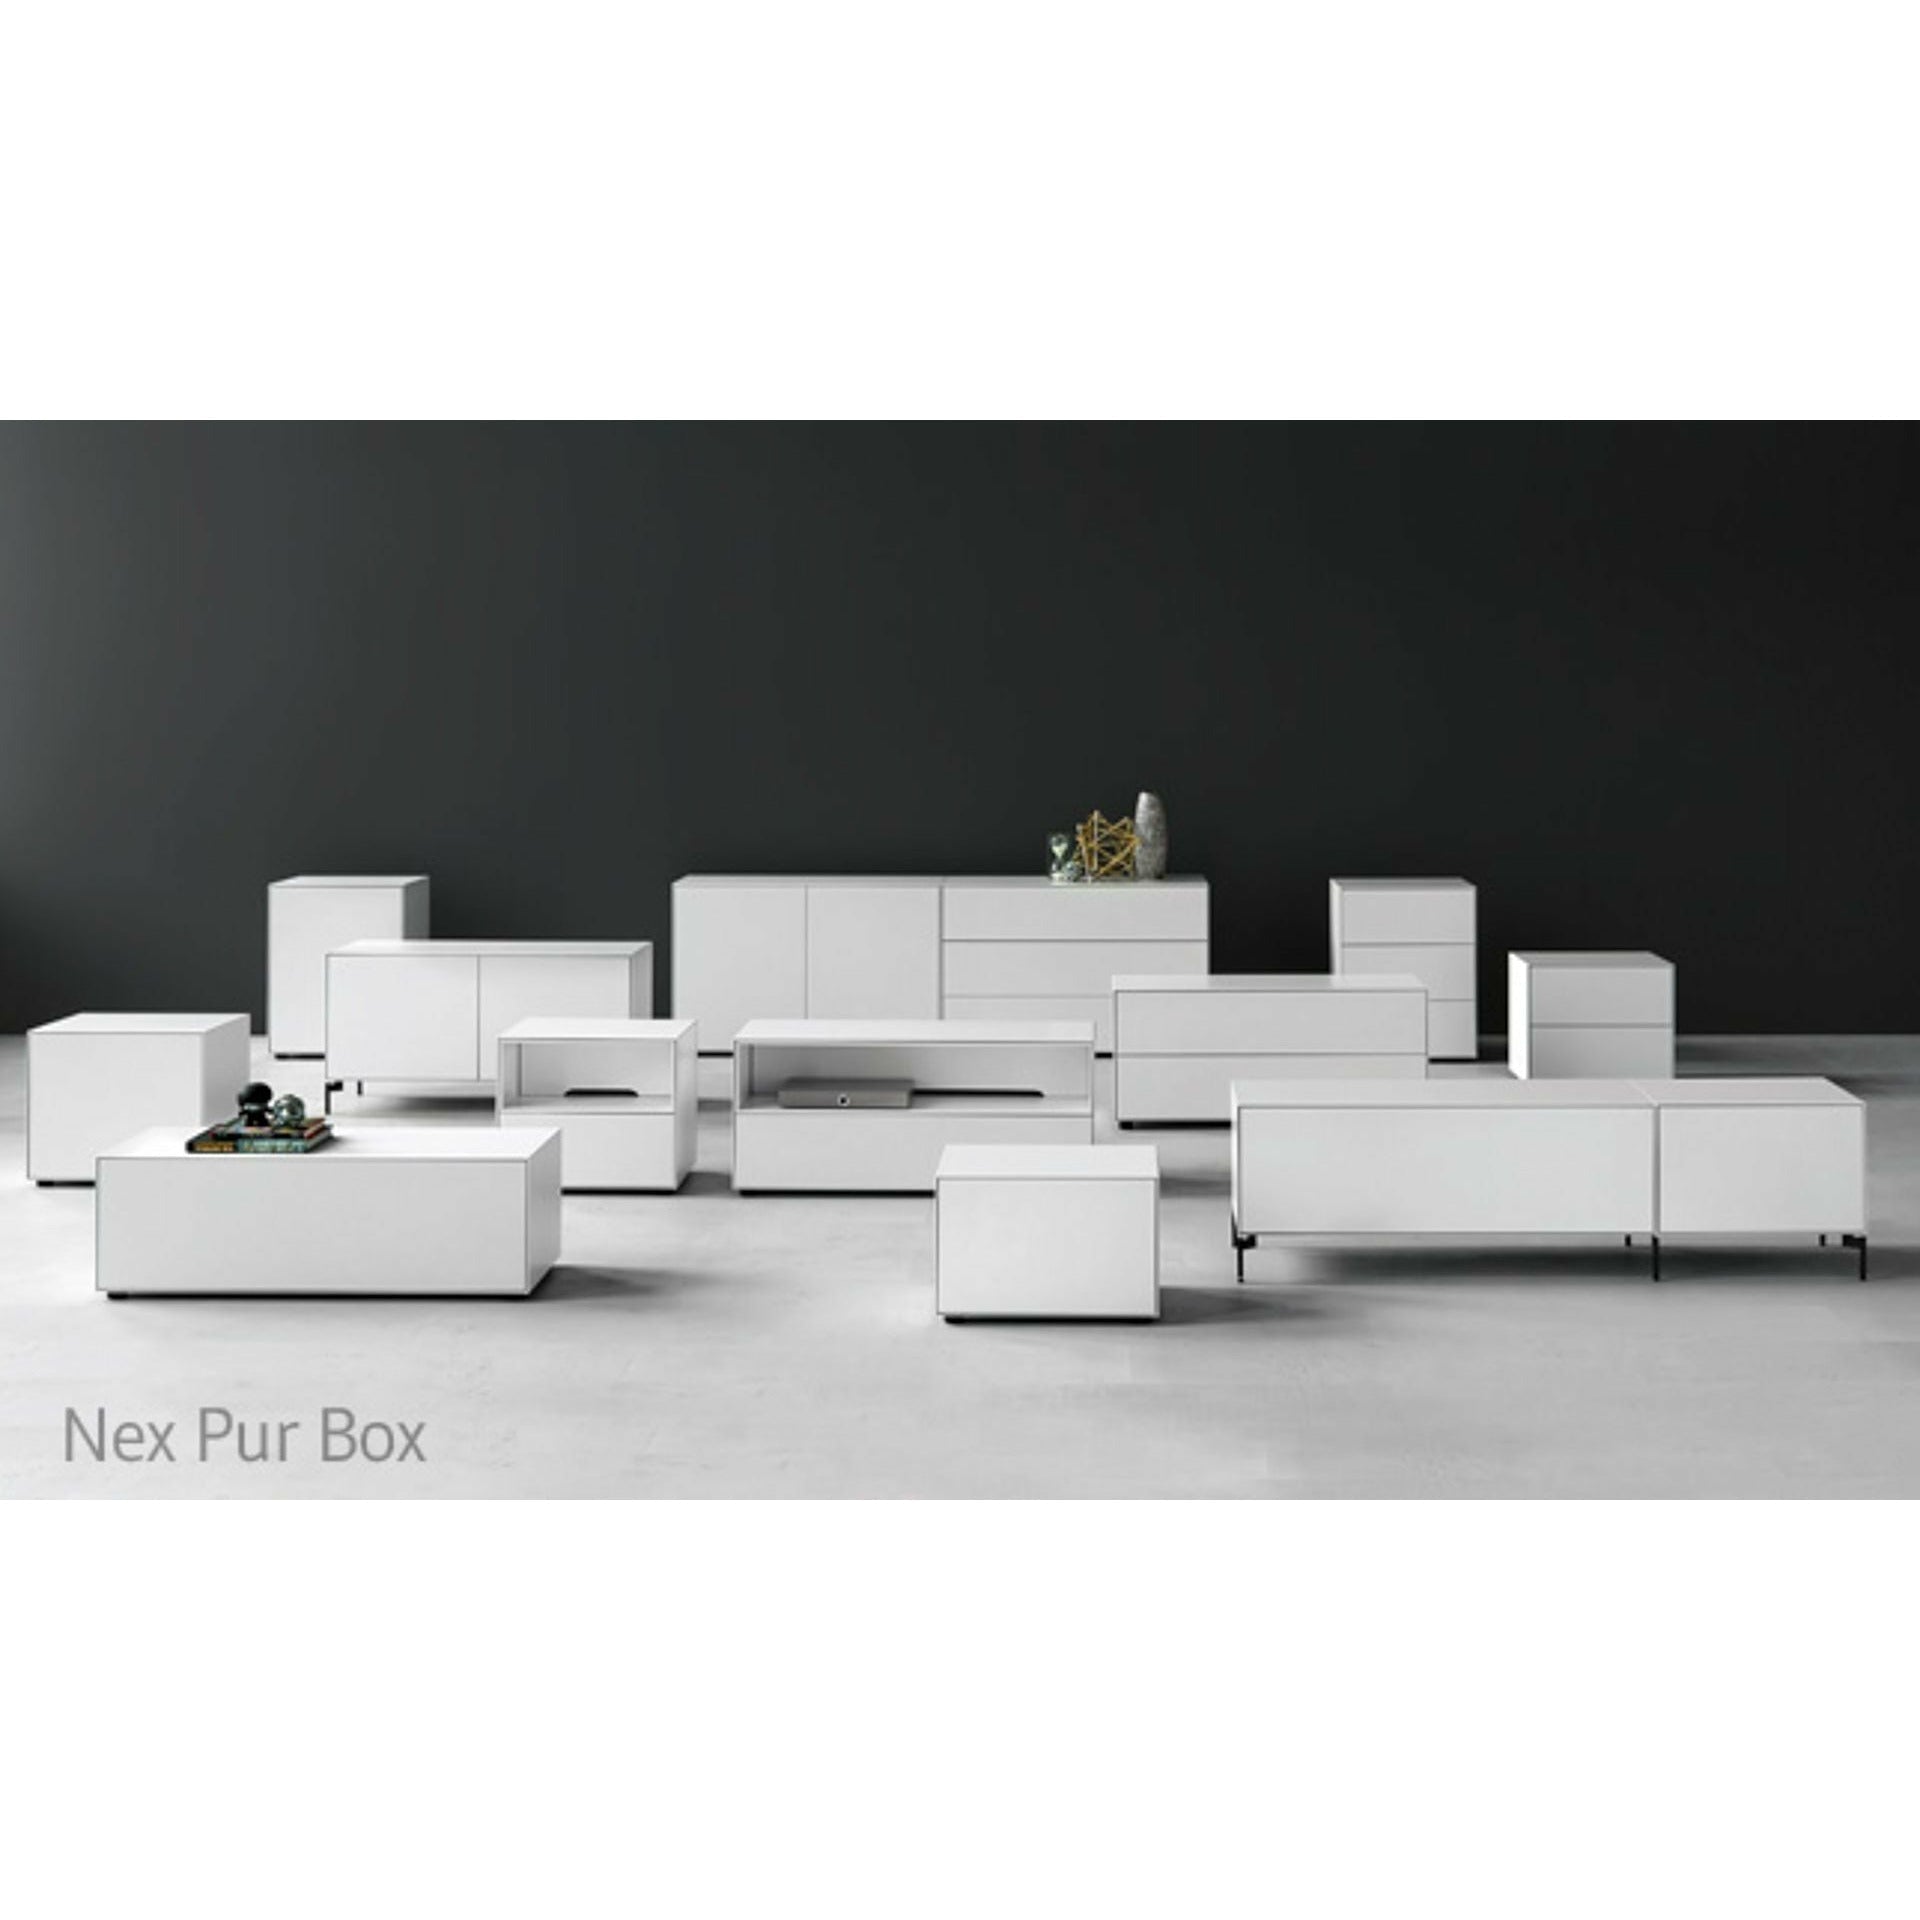 Piure Nex Pur Box Media Flap Hx W 37,5x180 cm, 1 estante